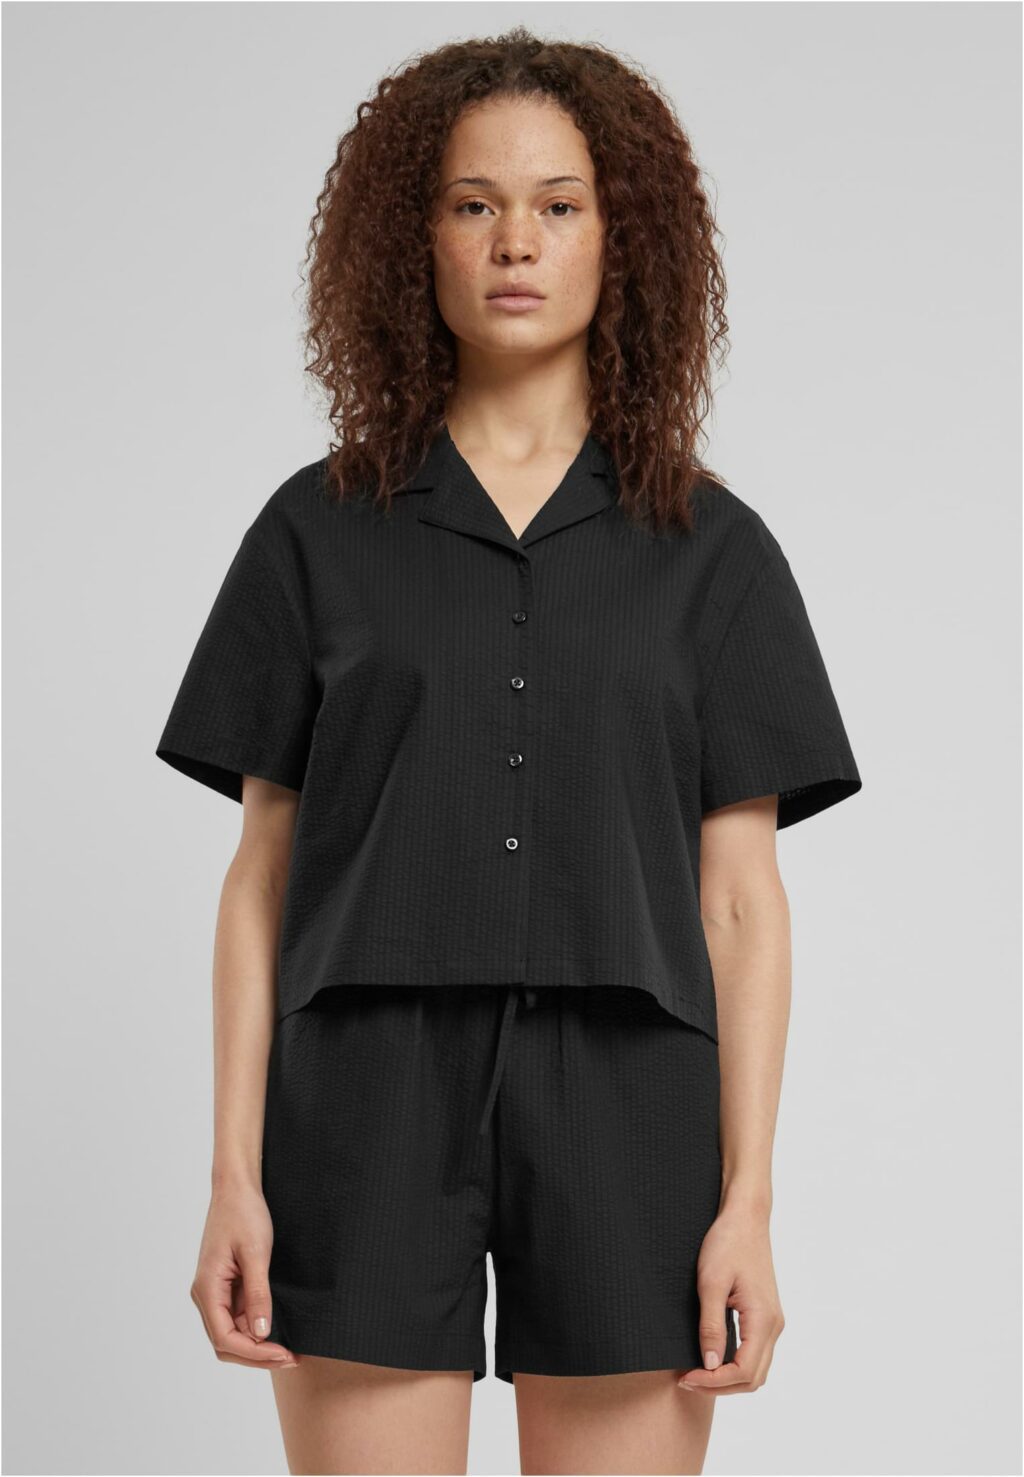 Urban Classics Ladies Seersucker Shirt black TB6181